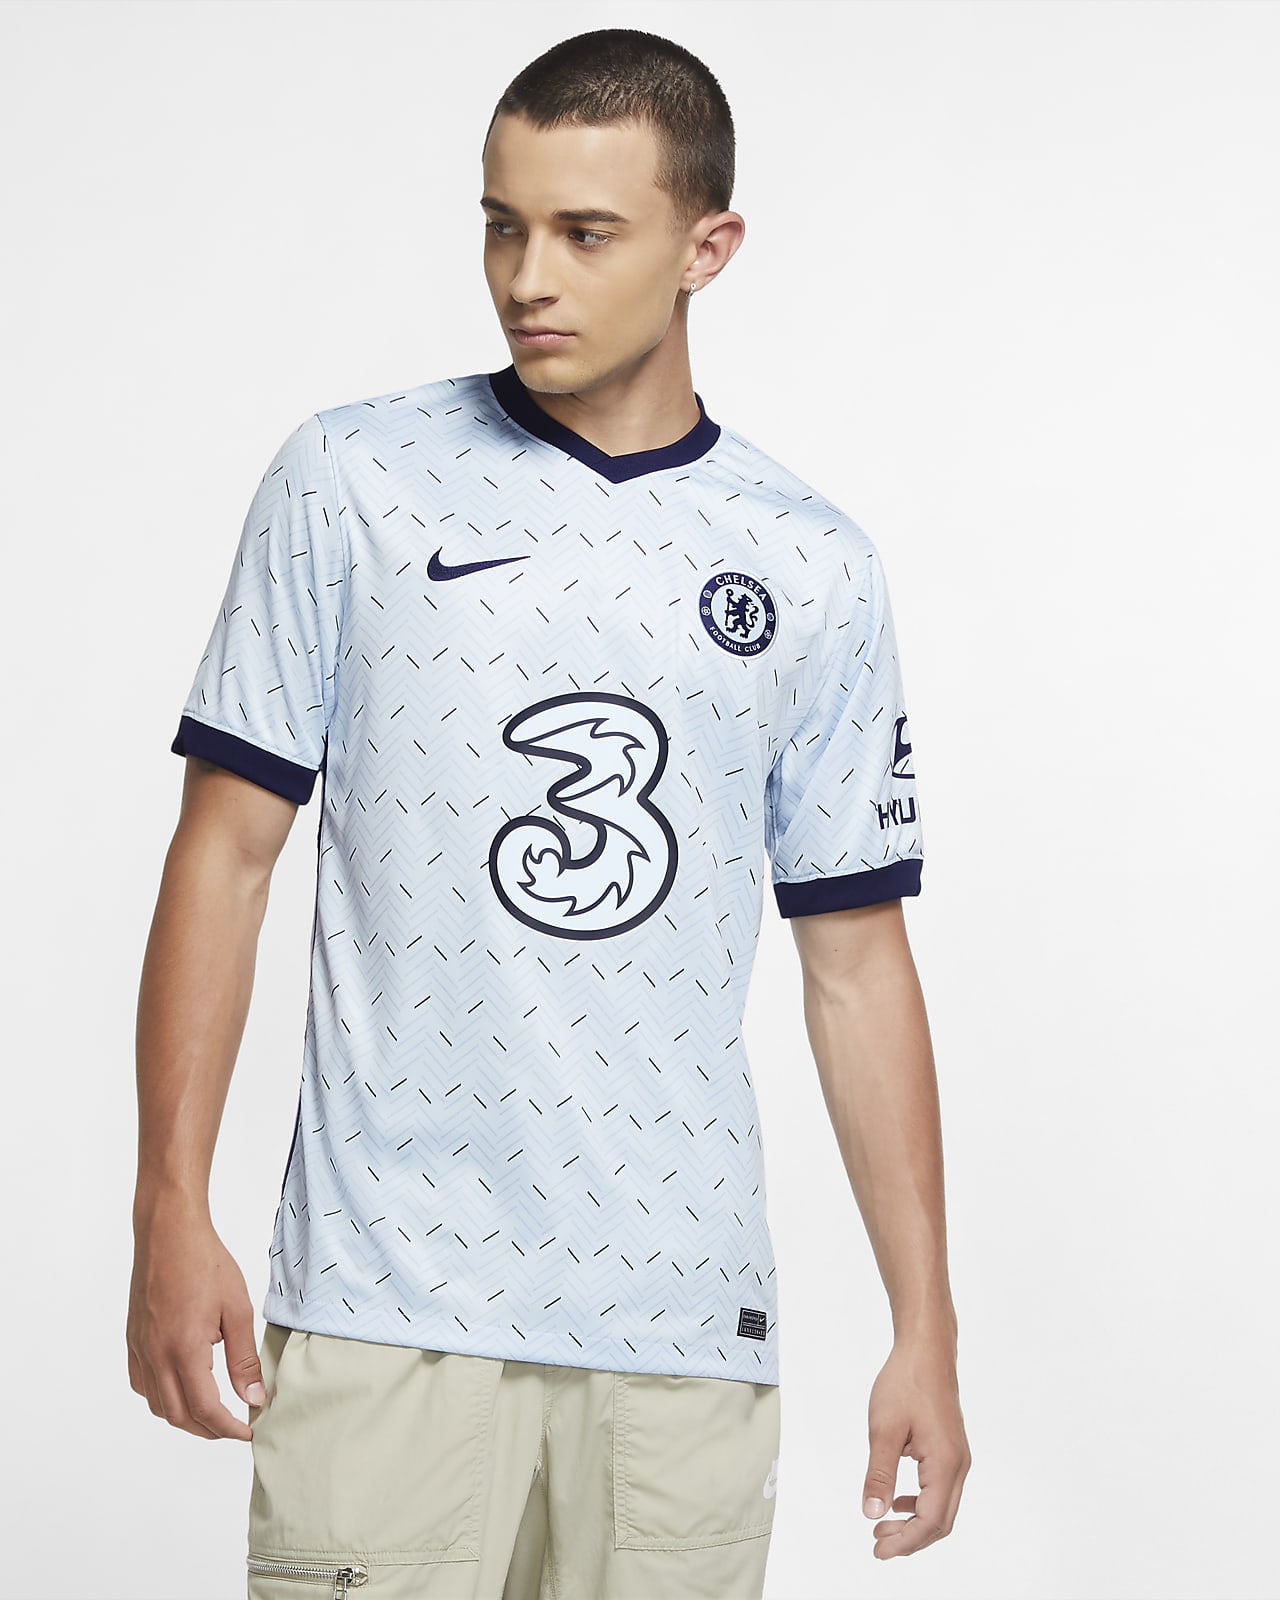 Camiseta de fútbol de visitante para hombre Chelsea FC 2020/21 Stadium. Nike .com